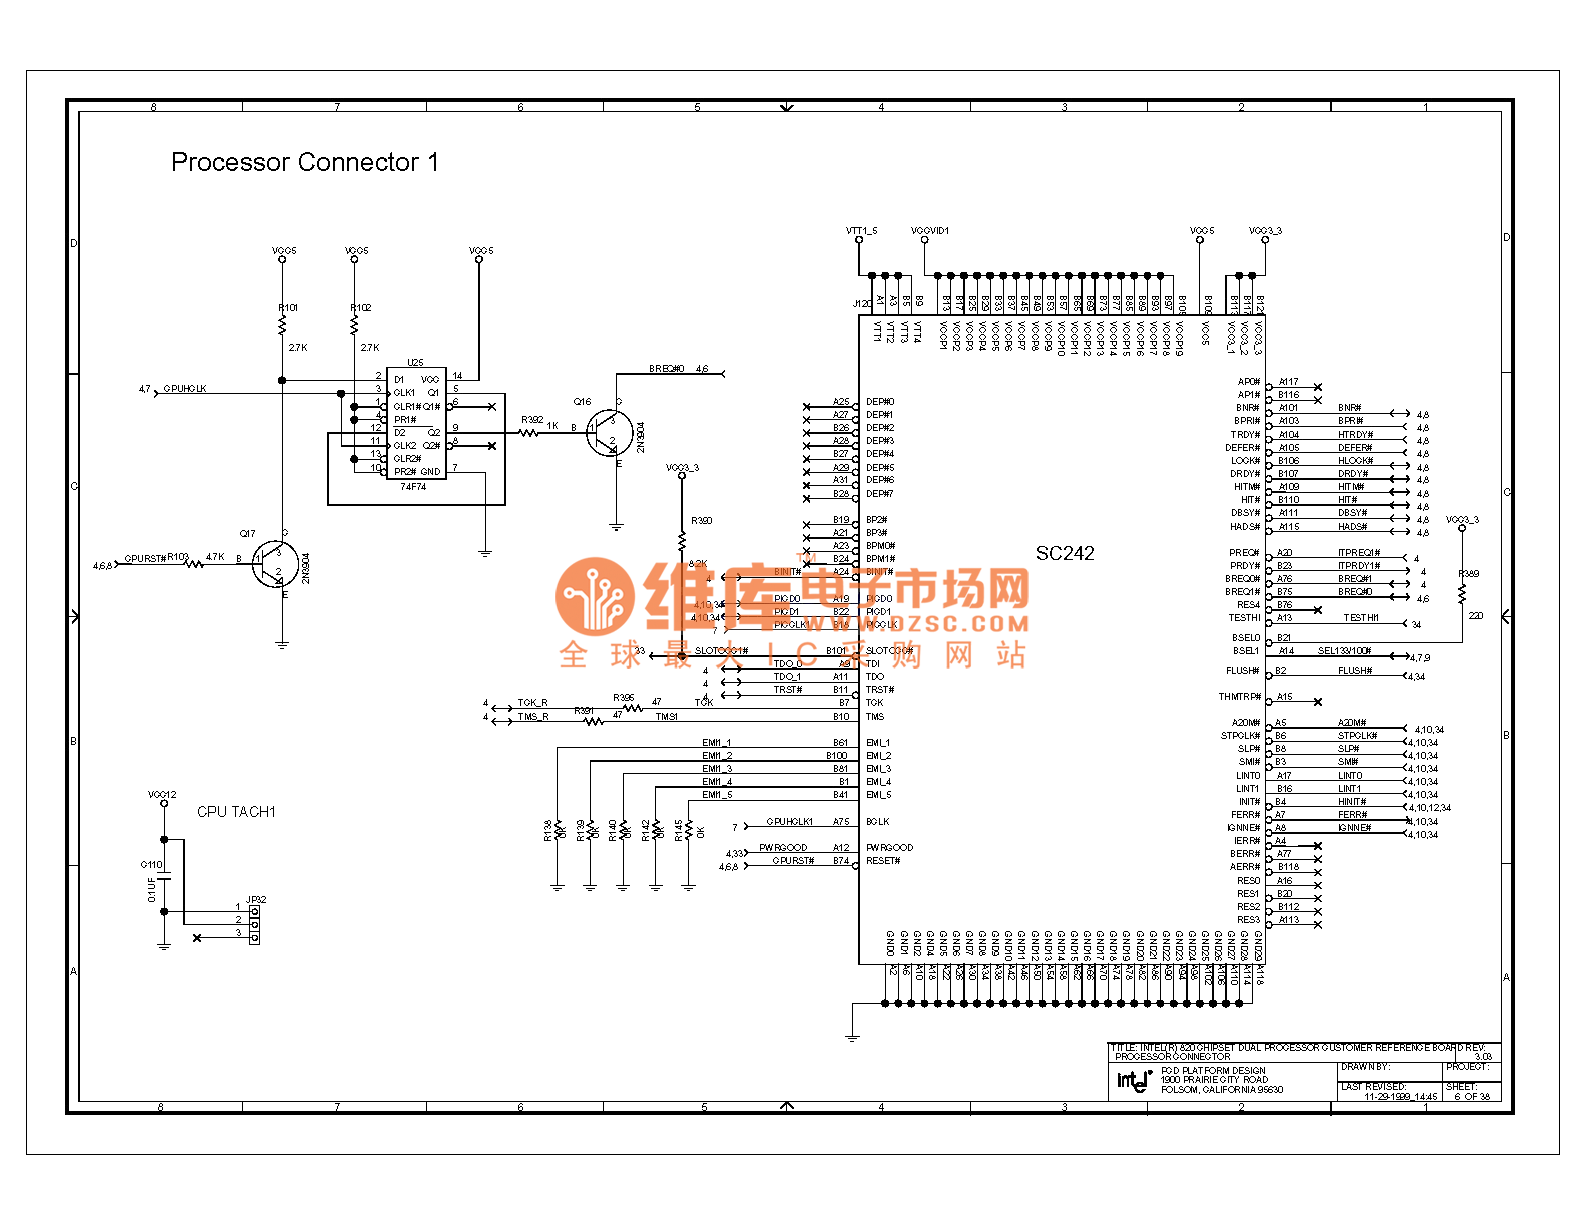 820e computer motherboard circuit diagram 46 - Computer ...